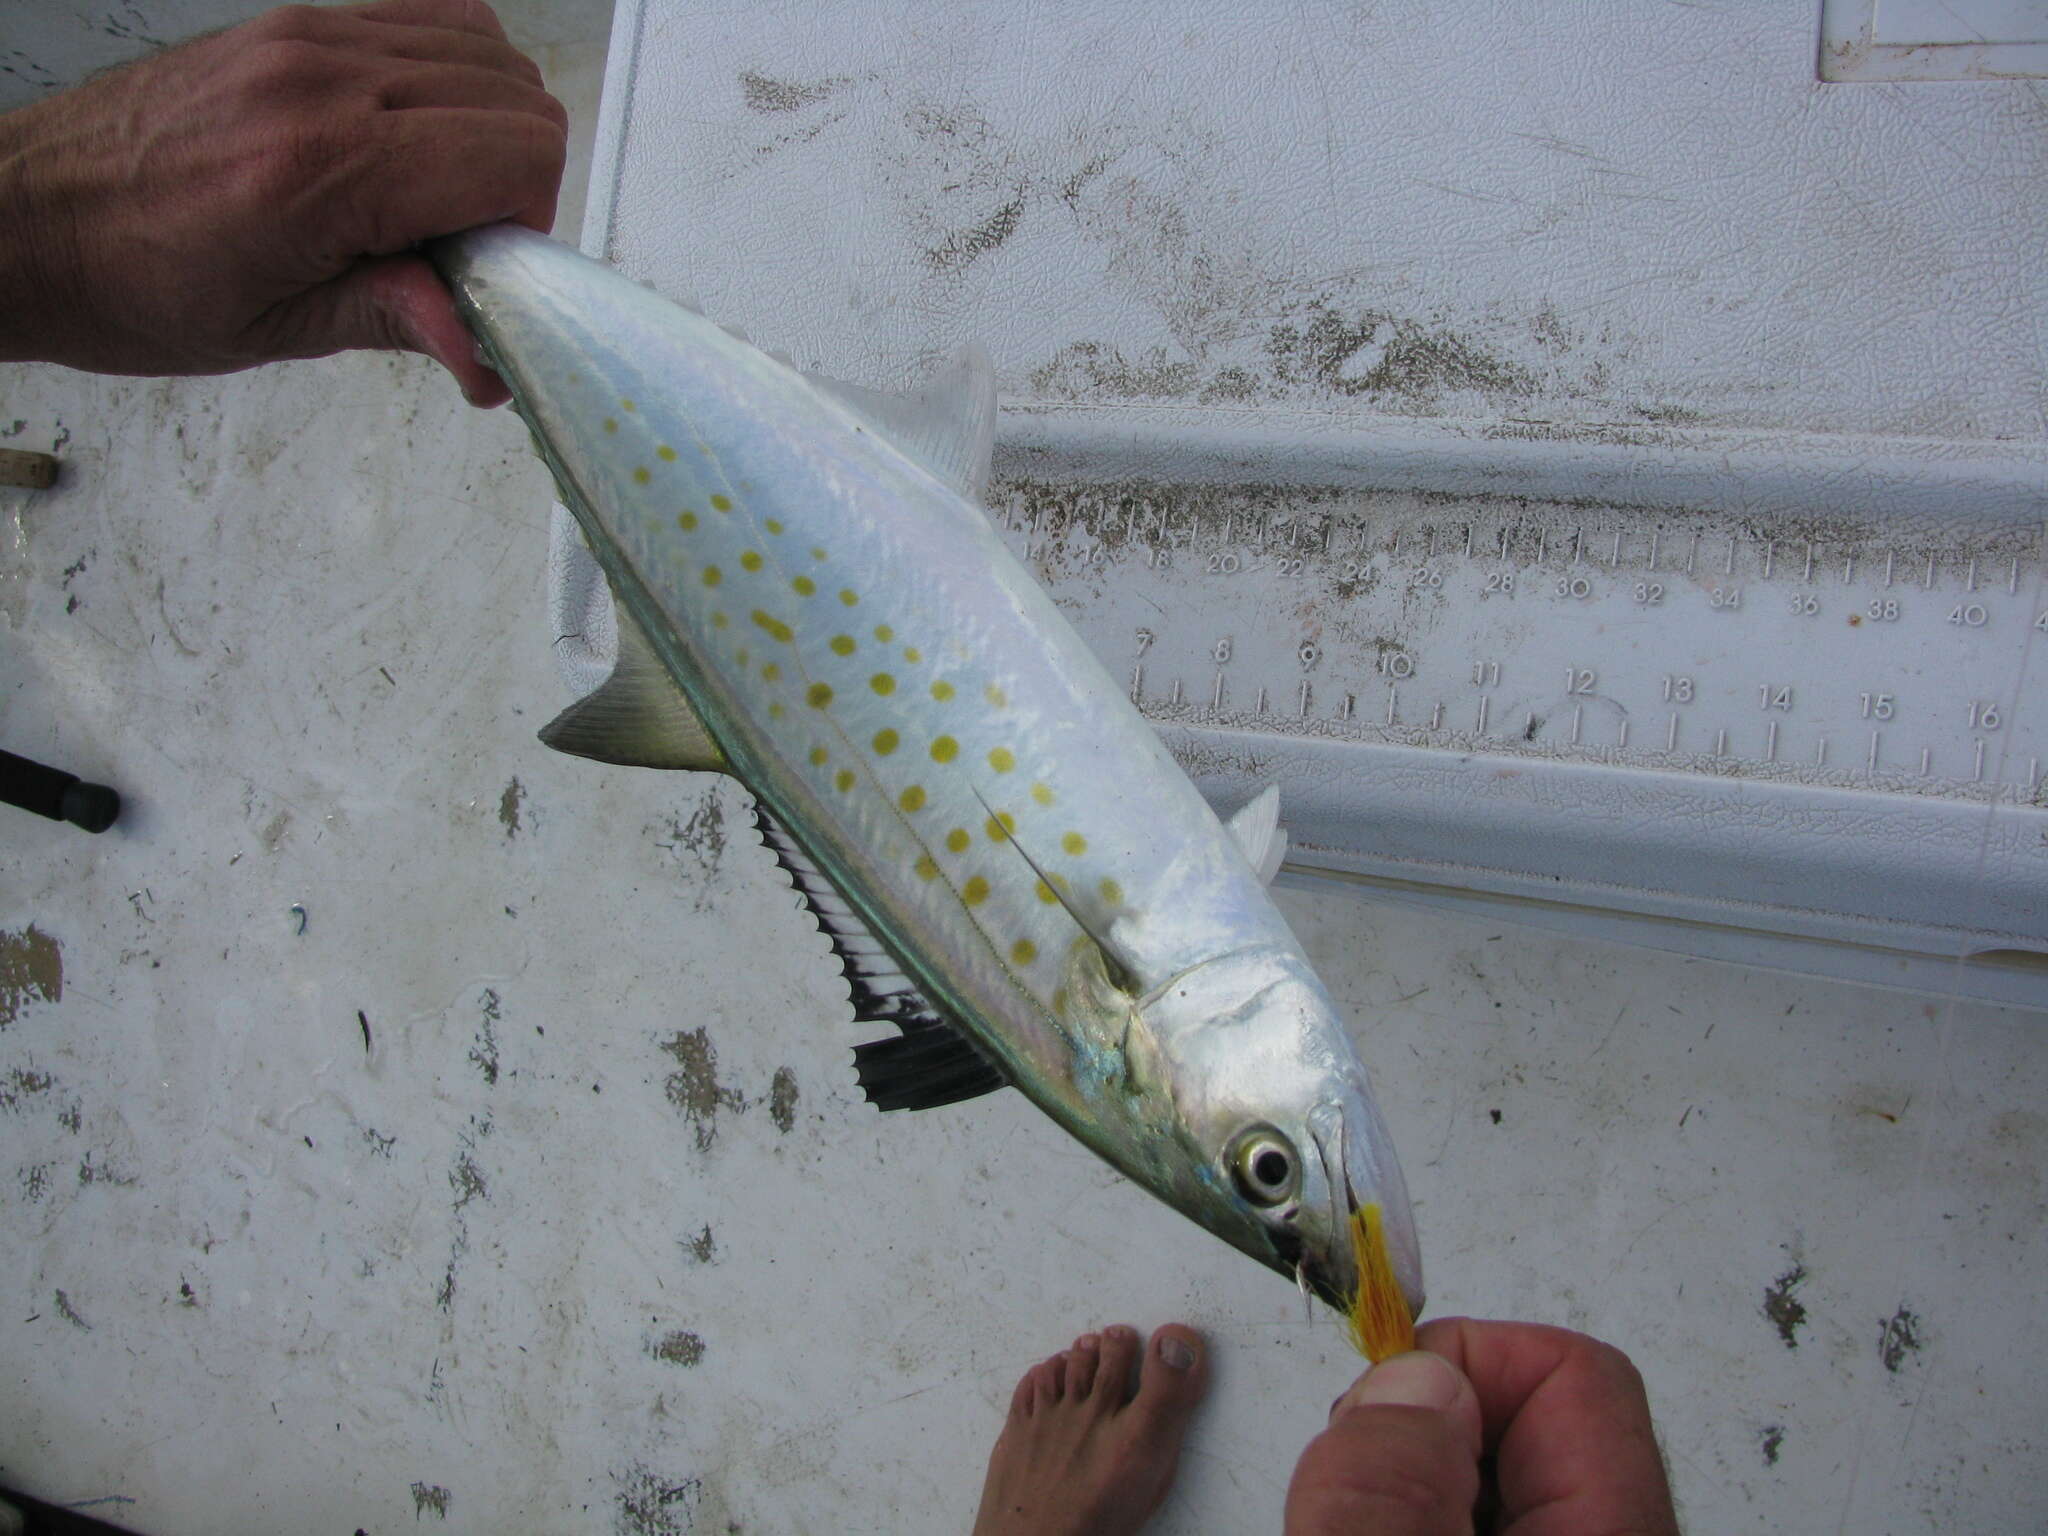 Image of Atlantic Spanish Mackerel